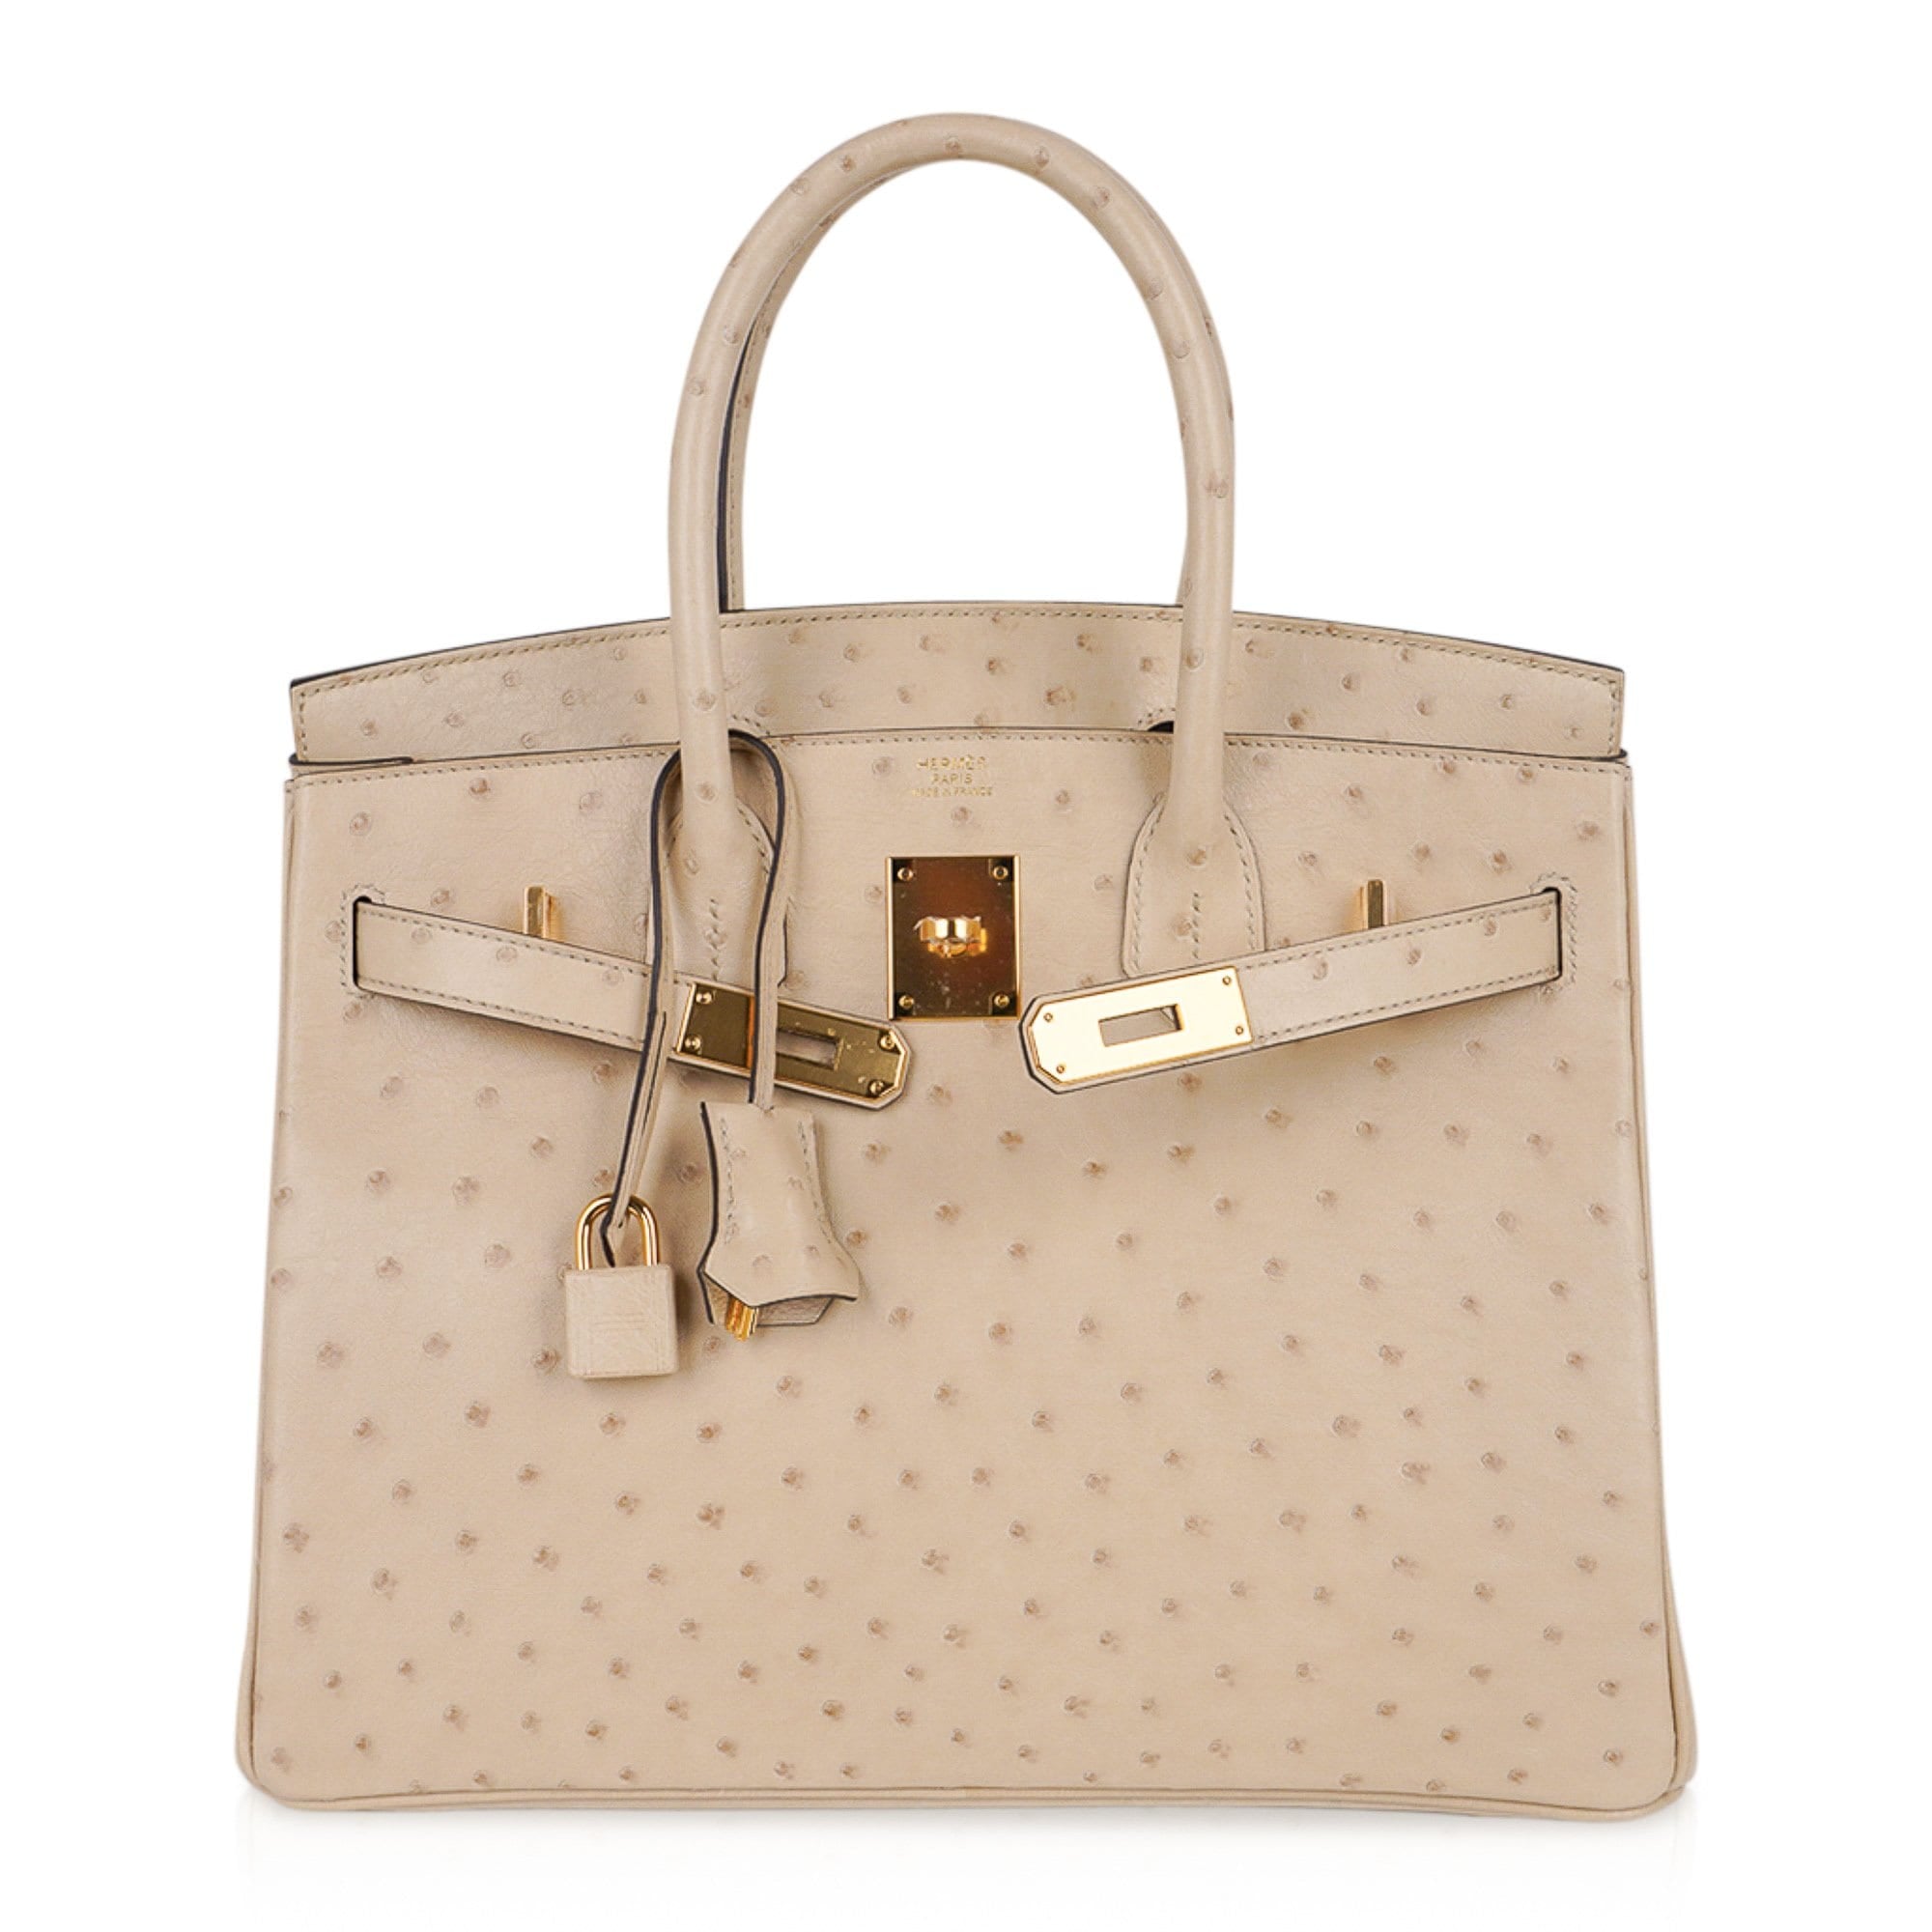 Sold at Auction: Hermes Birkin 30 Bag, Parchemin Ostrich Skin, Gold Hardware